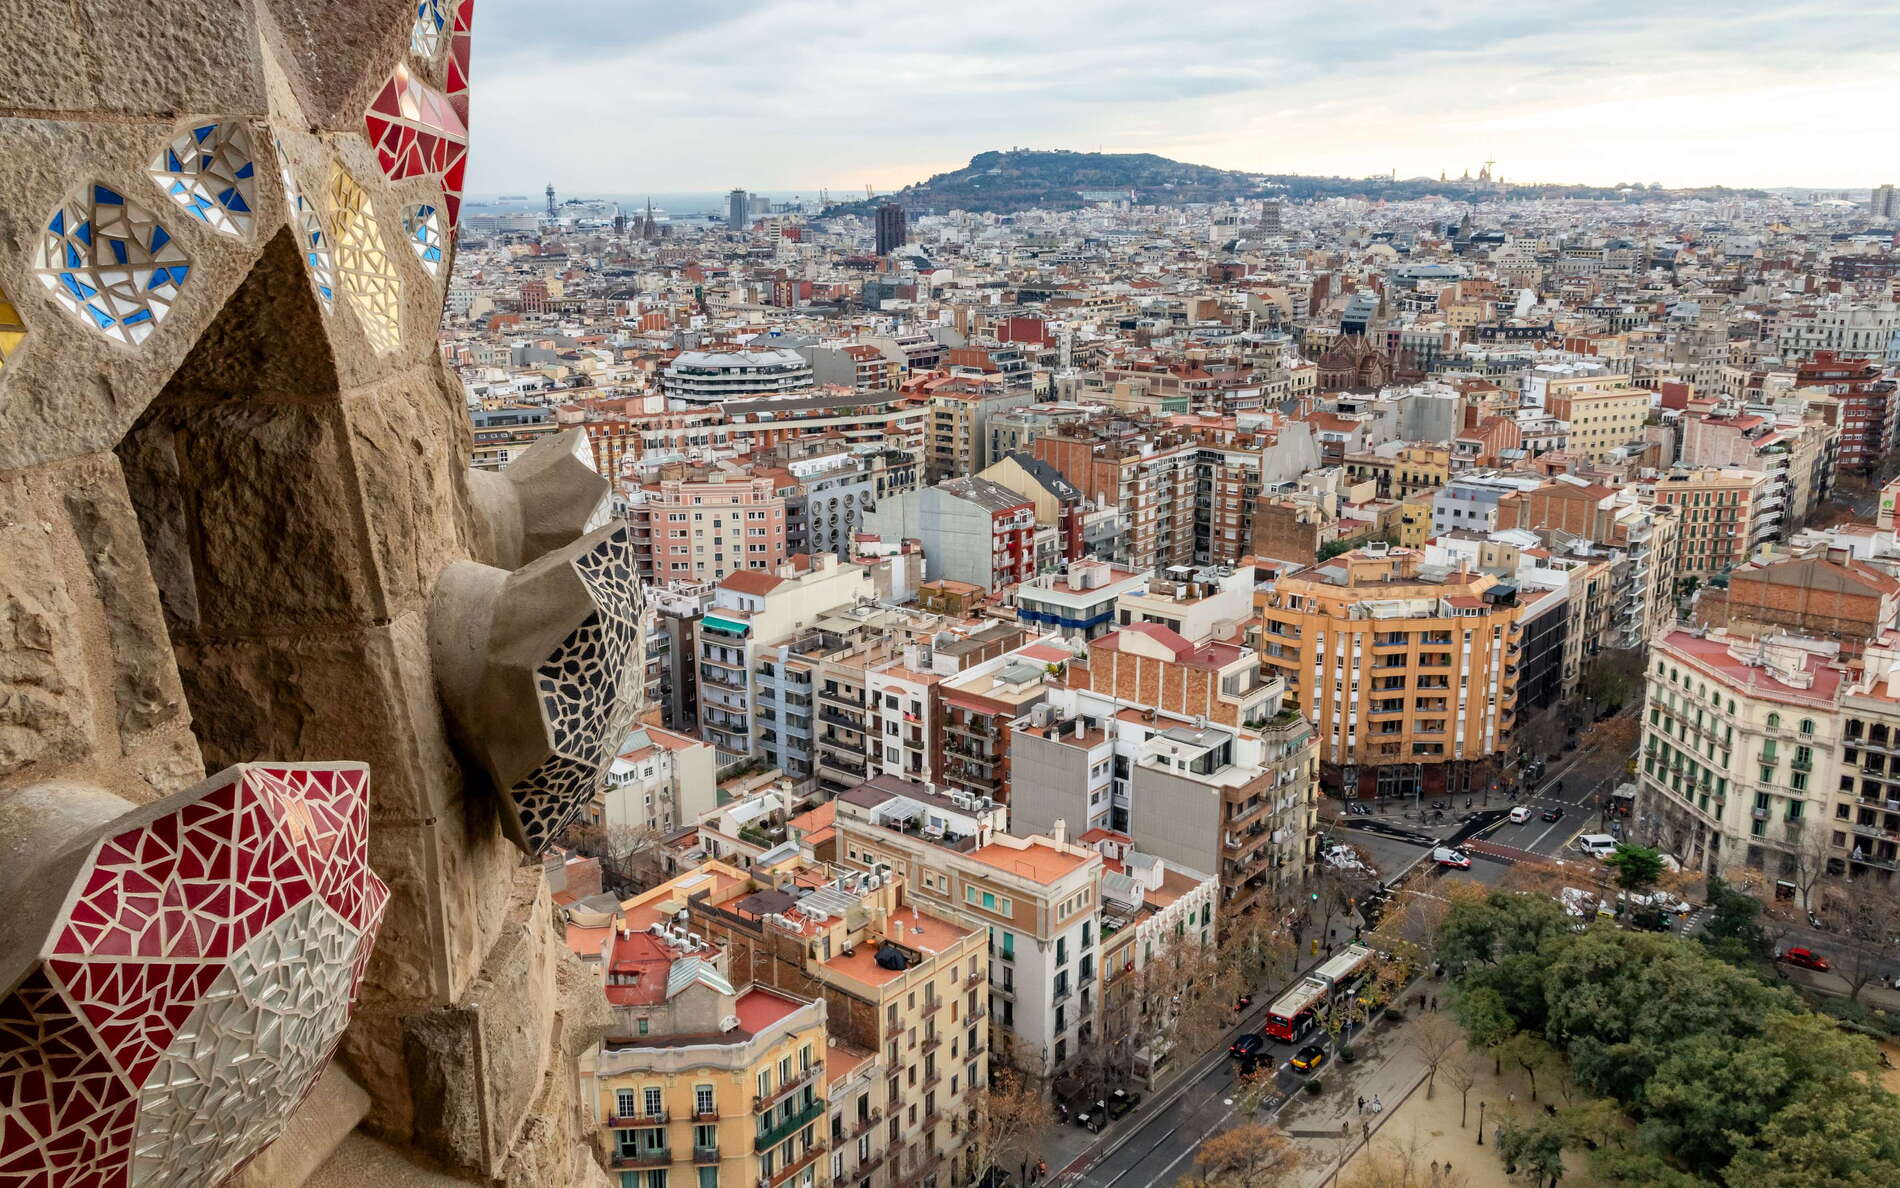 Barcelona | Sagrada Família and Eixample